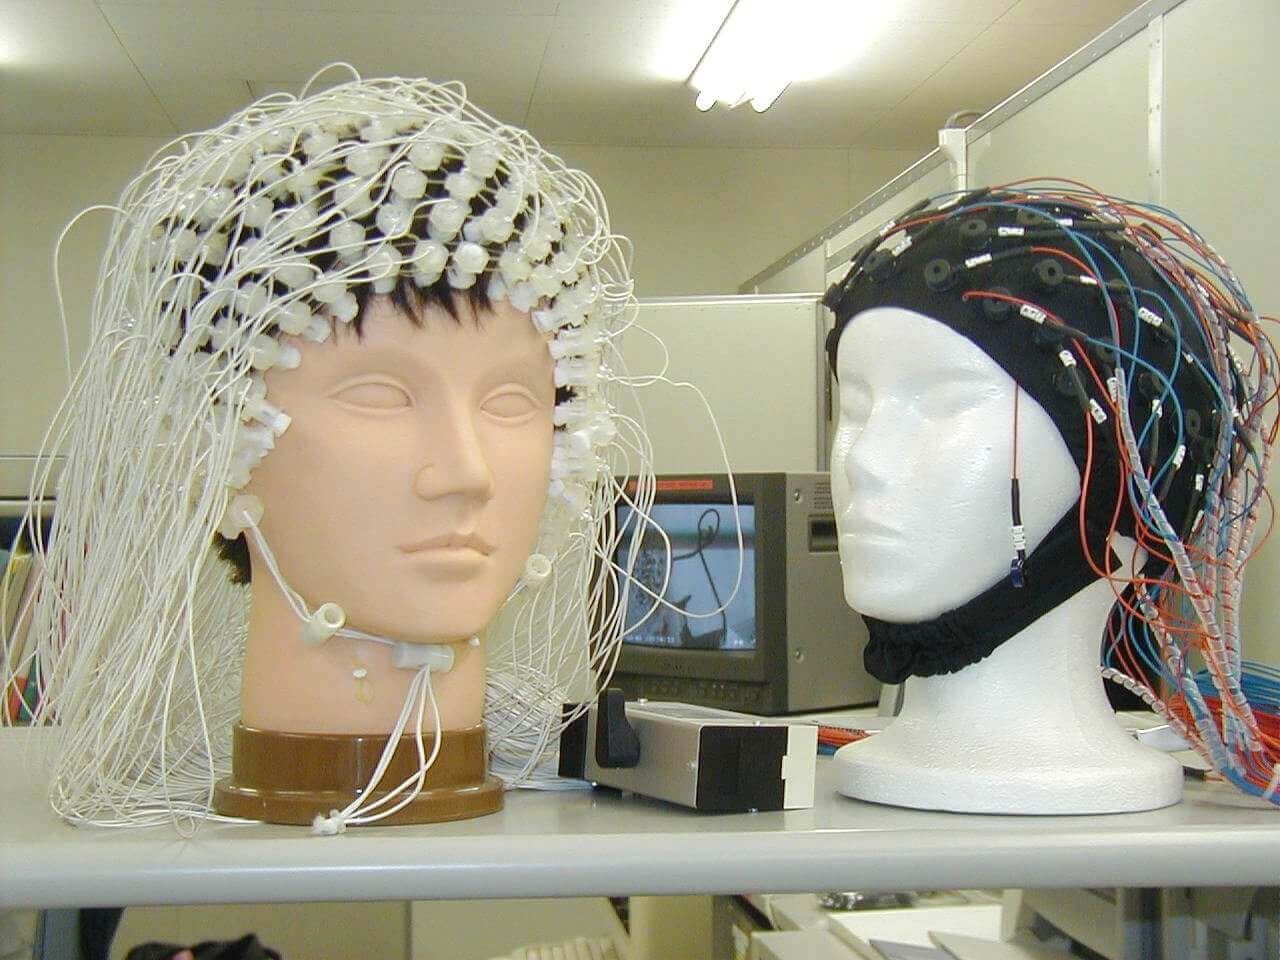 Ээг пермь. ЭЭГ головного мозга электроды. Электродная шапочка для ЭЭГ. Шлем для ЭЭГ Нейрософт. Электроэнцефалография головного мозга (ЭЭГ).